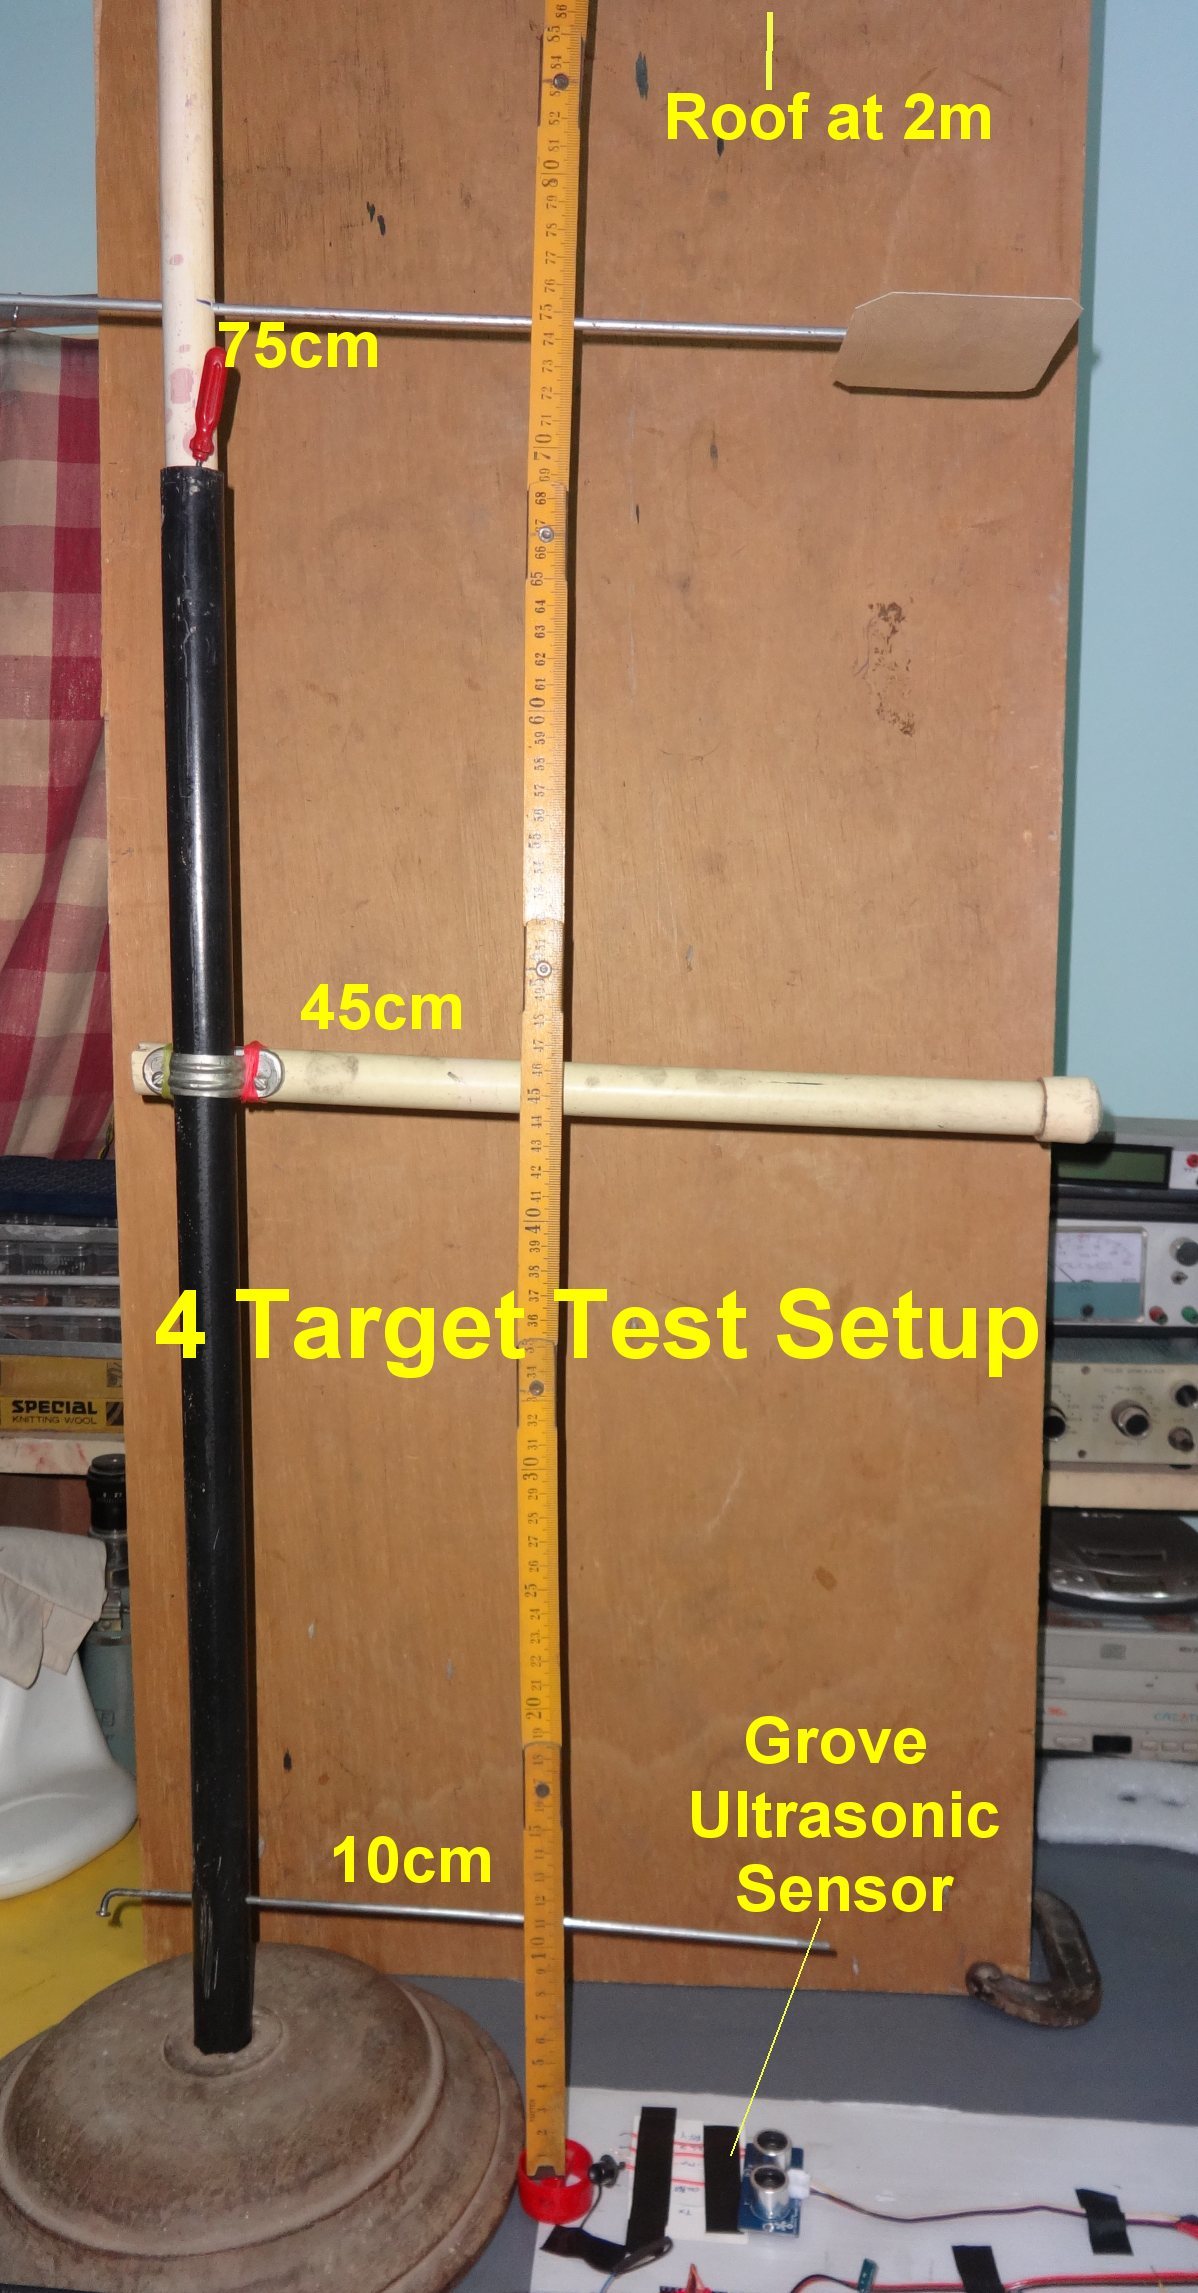 01_4 Target Test Setup.jpg